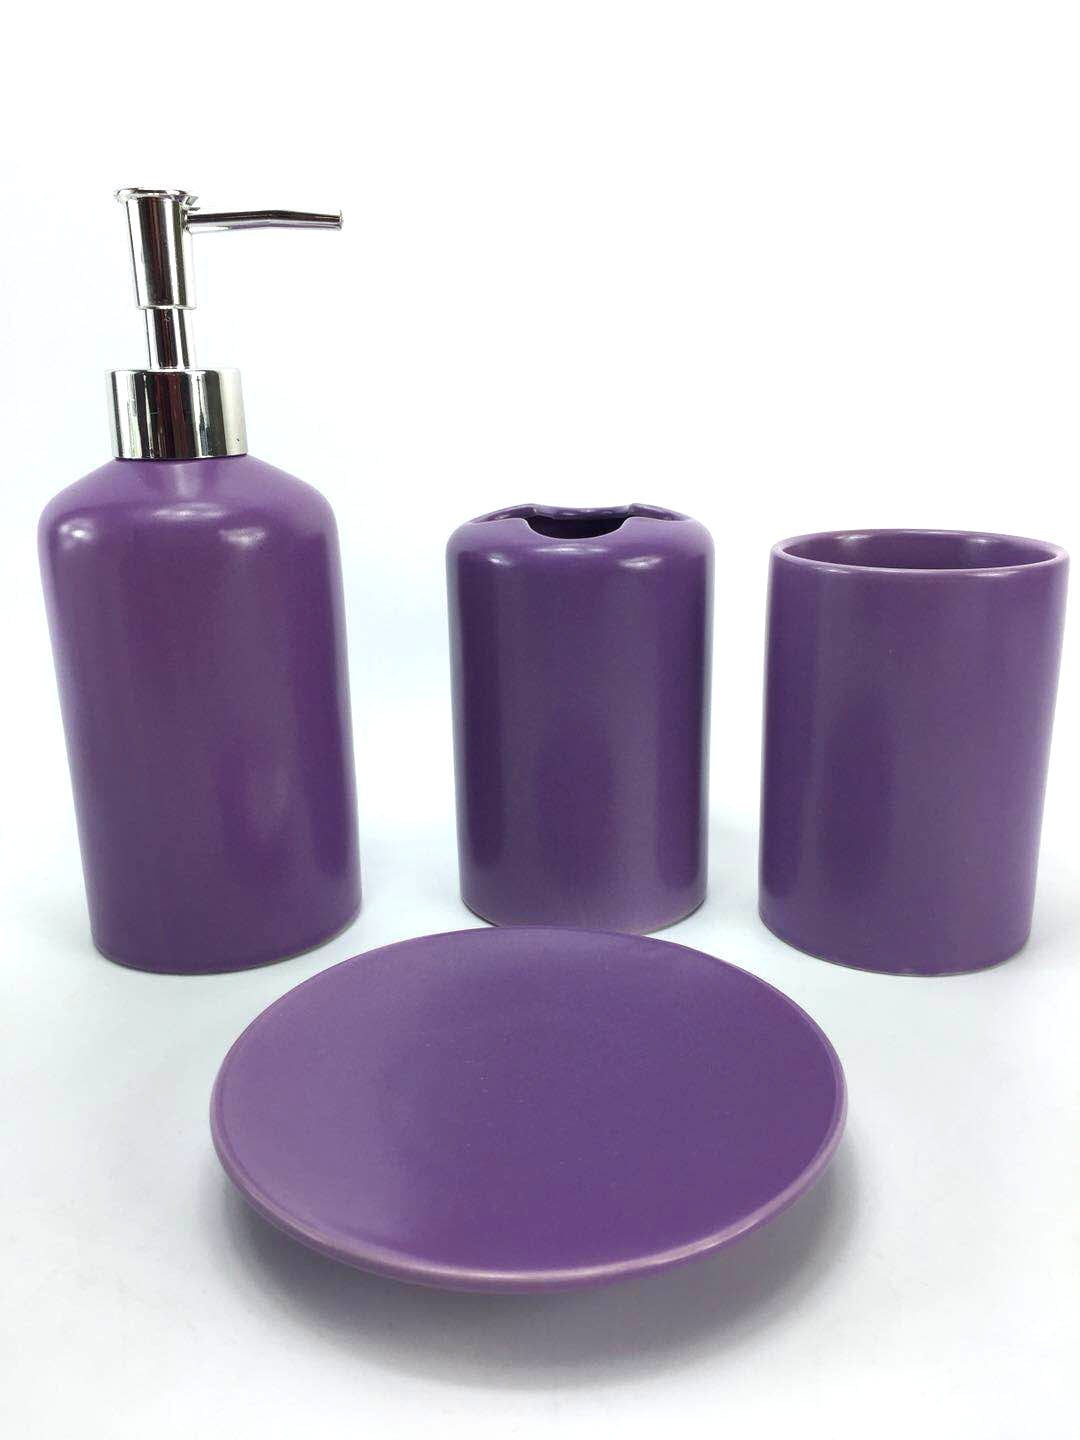 bathroom accessories soap dispenser